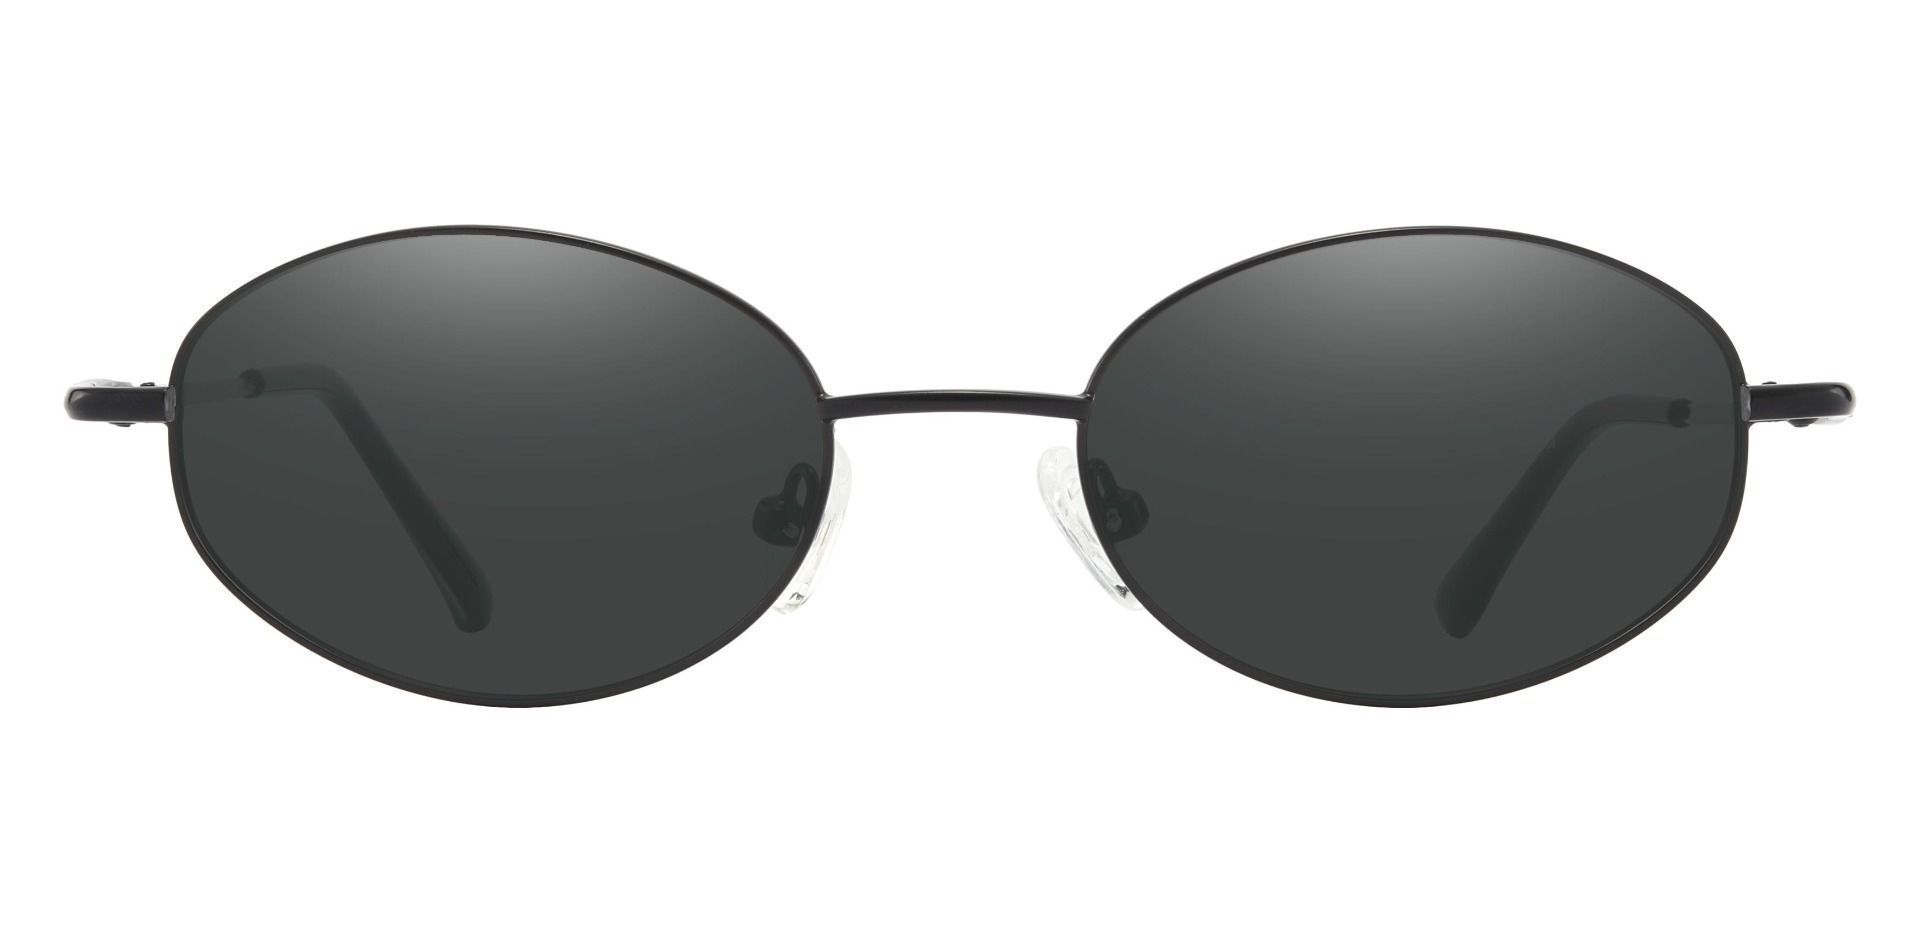 Aline Oval Prescription Sunglasses - Black Frame With Gray Lenses ...